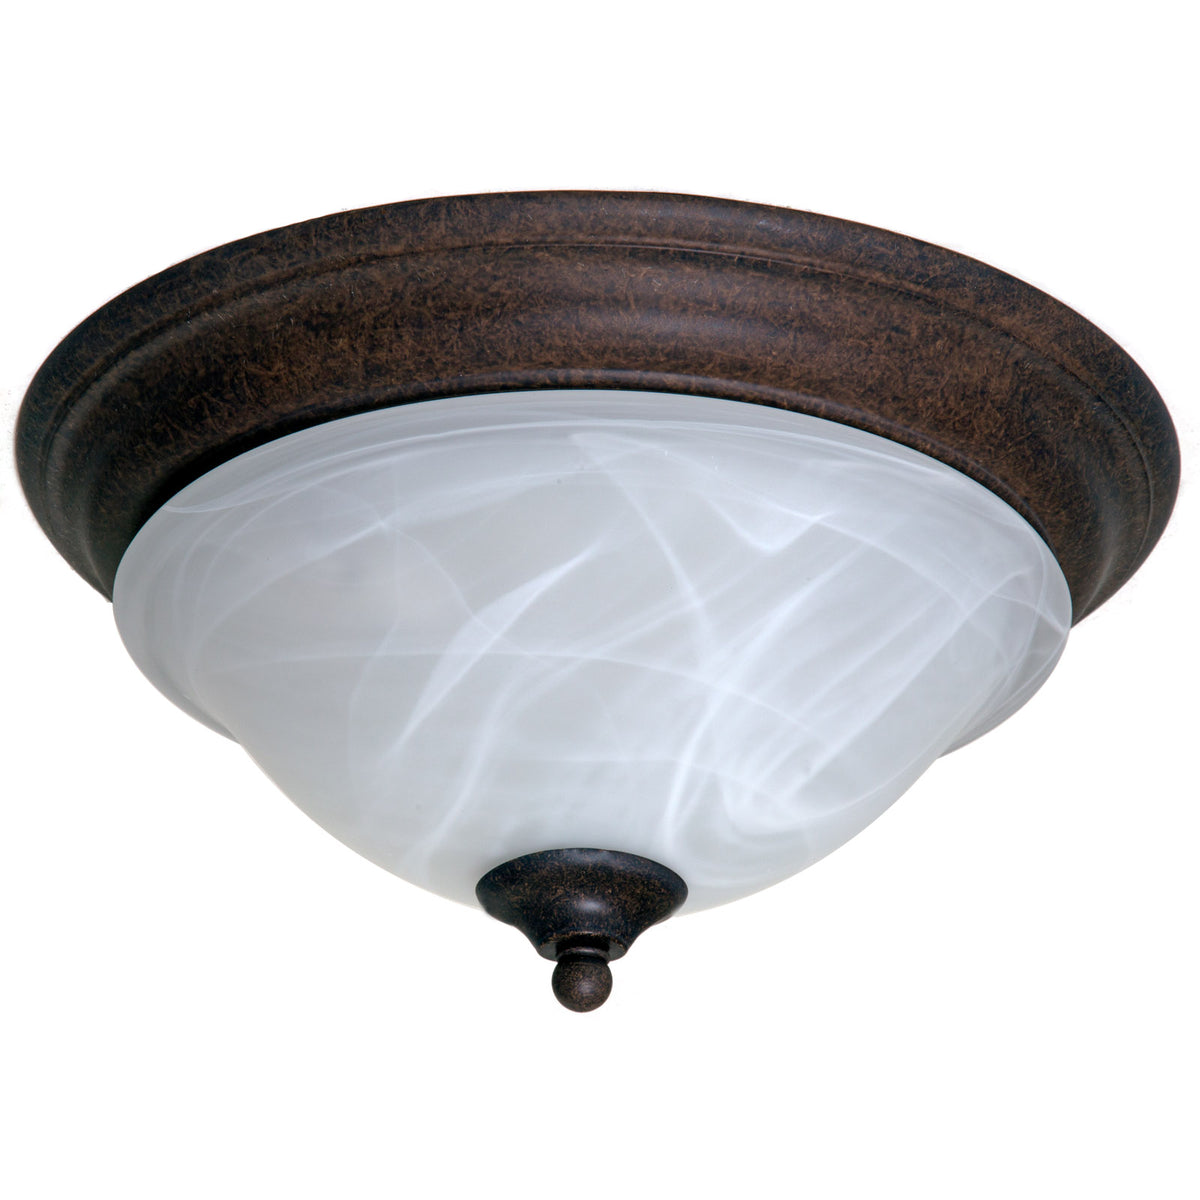 buy ceiling light fixtures at cheap rate in bulk. wholesale & retail lamp supplies store. home décor ideas, maintenance, repair replacement parts